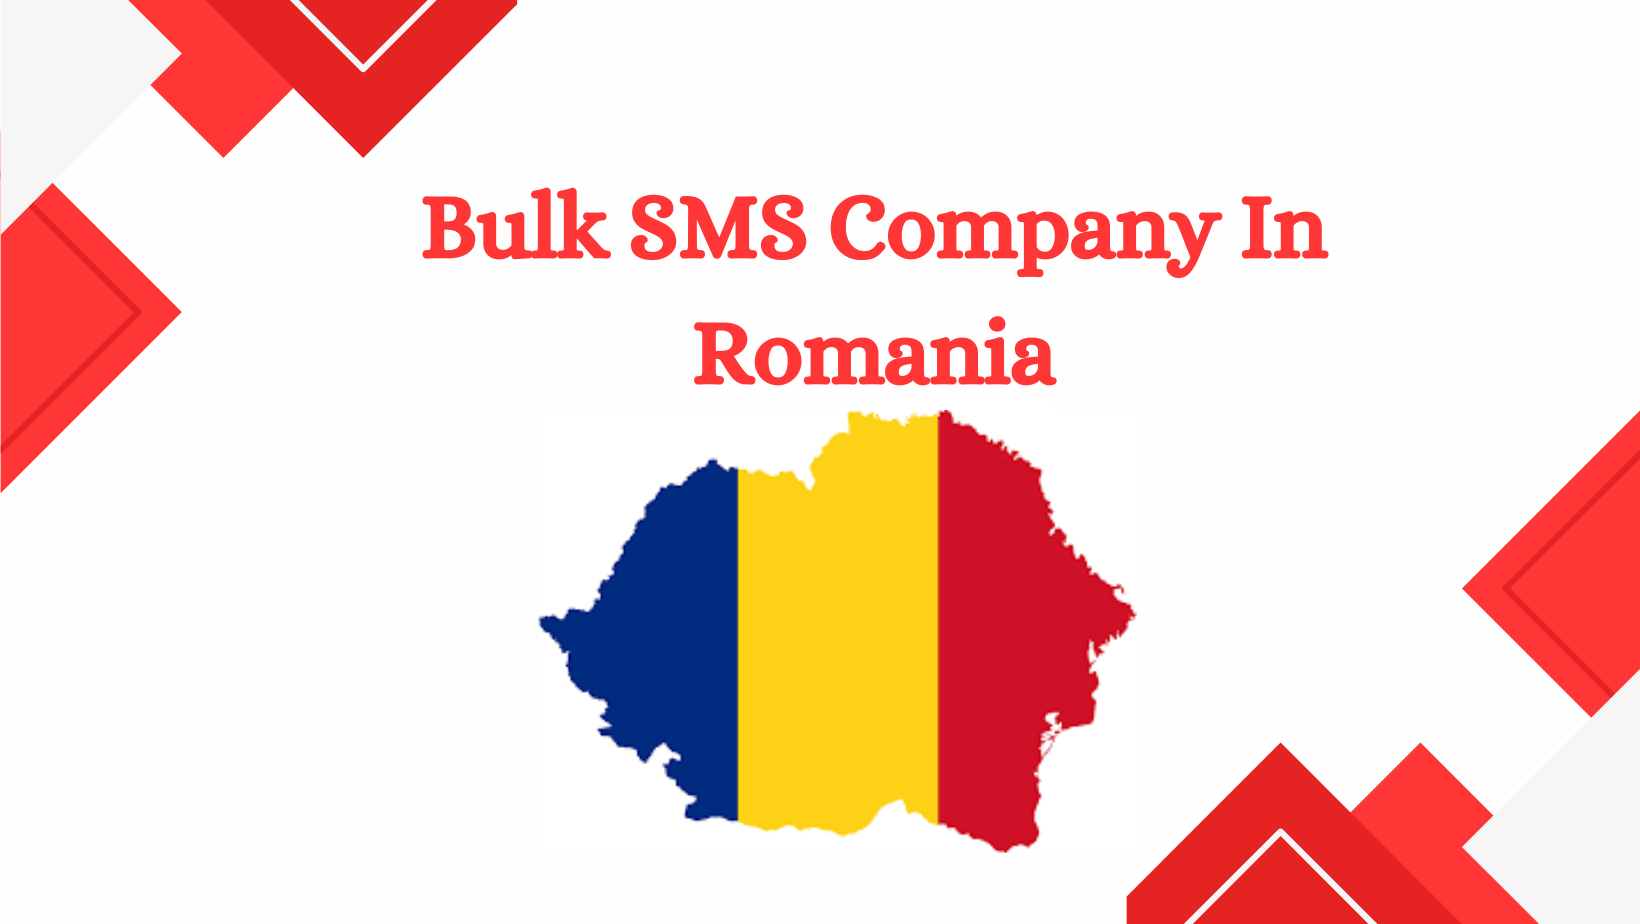 Bulk SMS Company In Romania